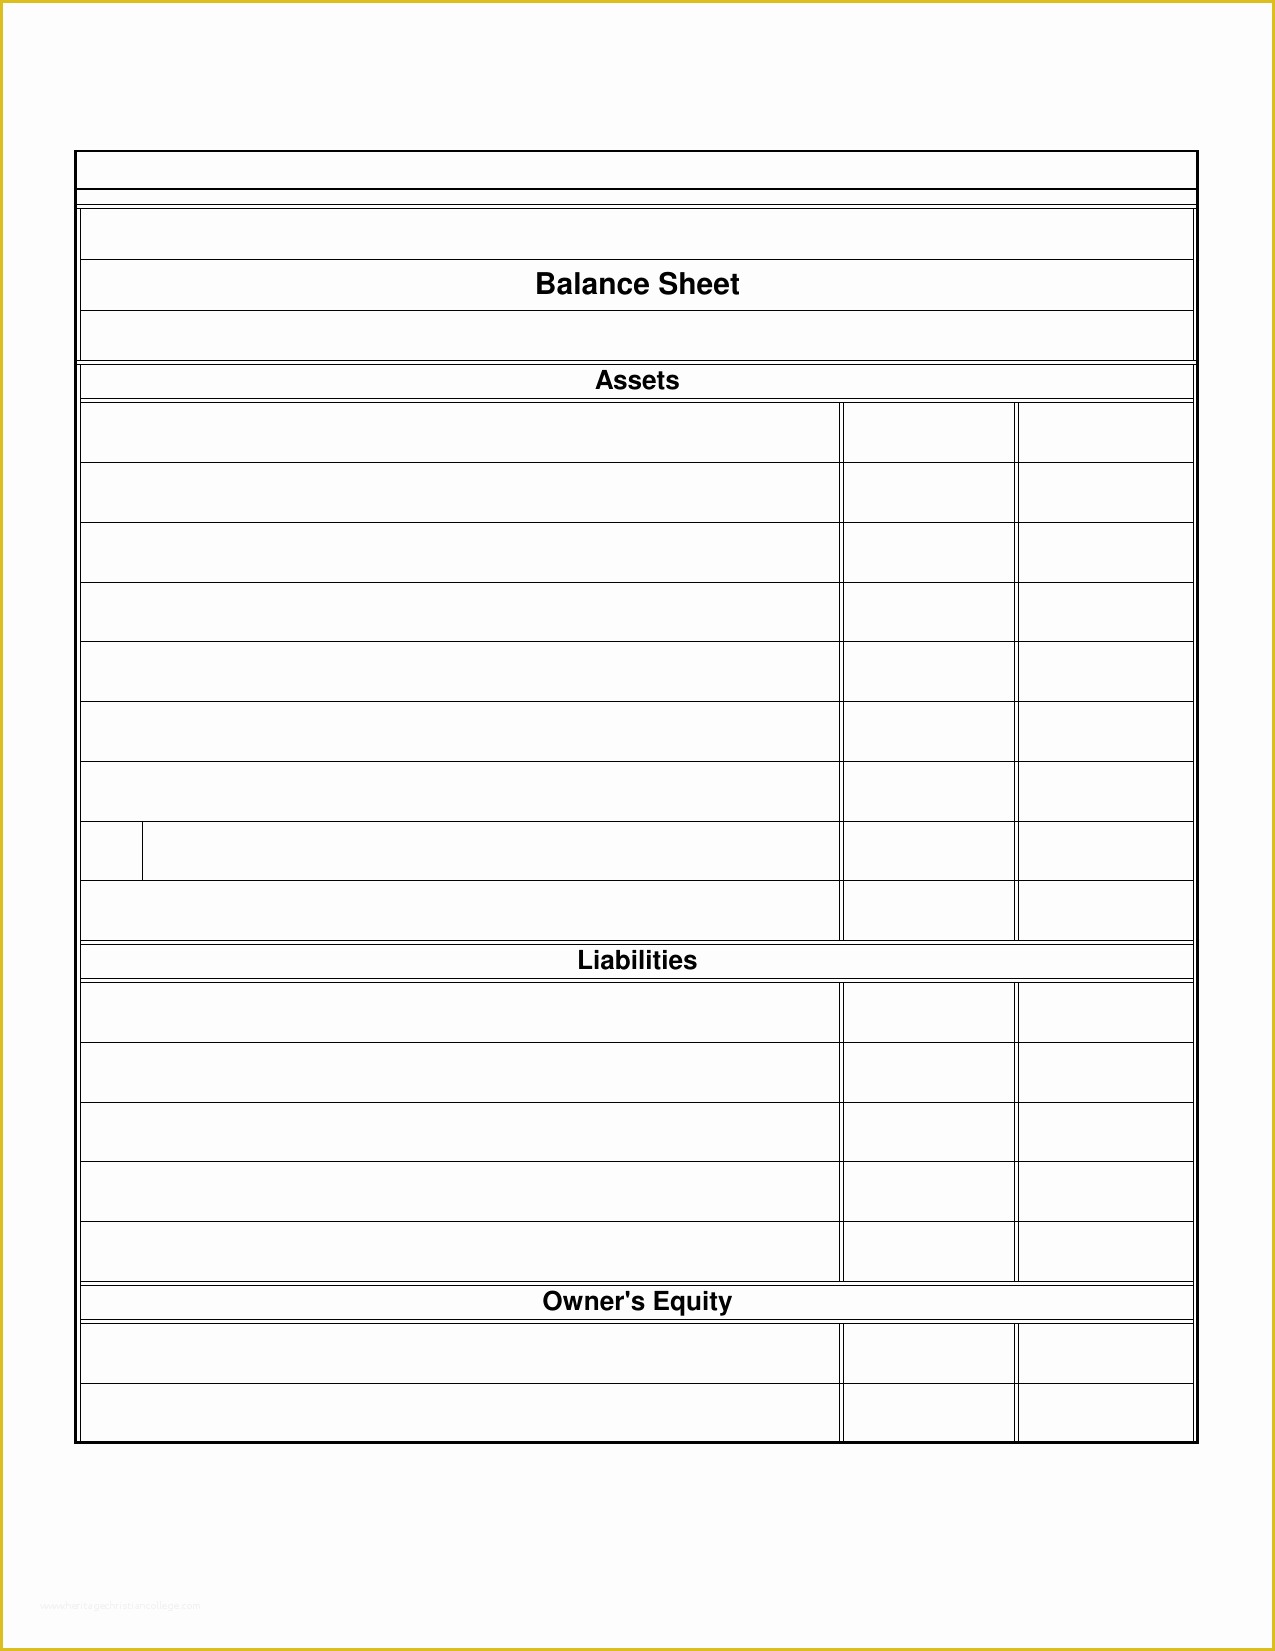 Business Balance Sheet Template Free Download Of Download Restaurant Balance Sheet Template Excel